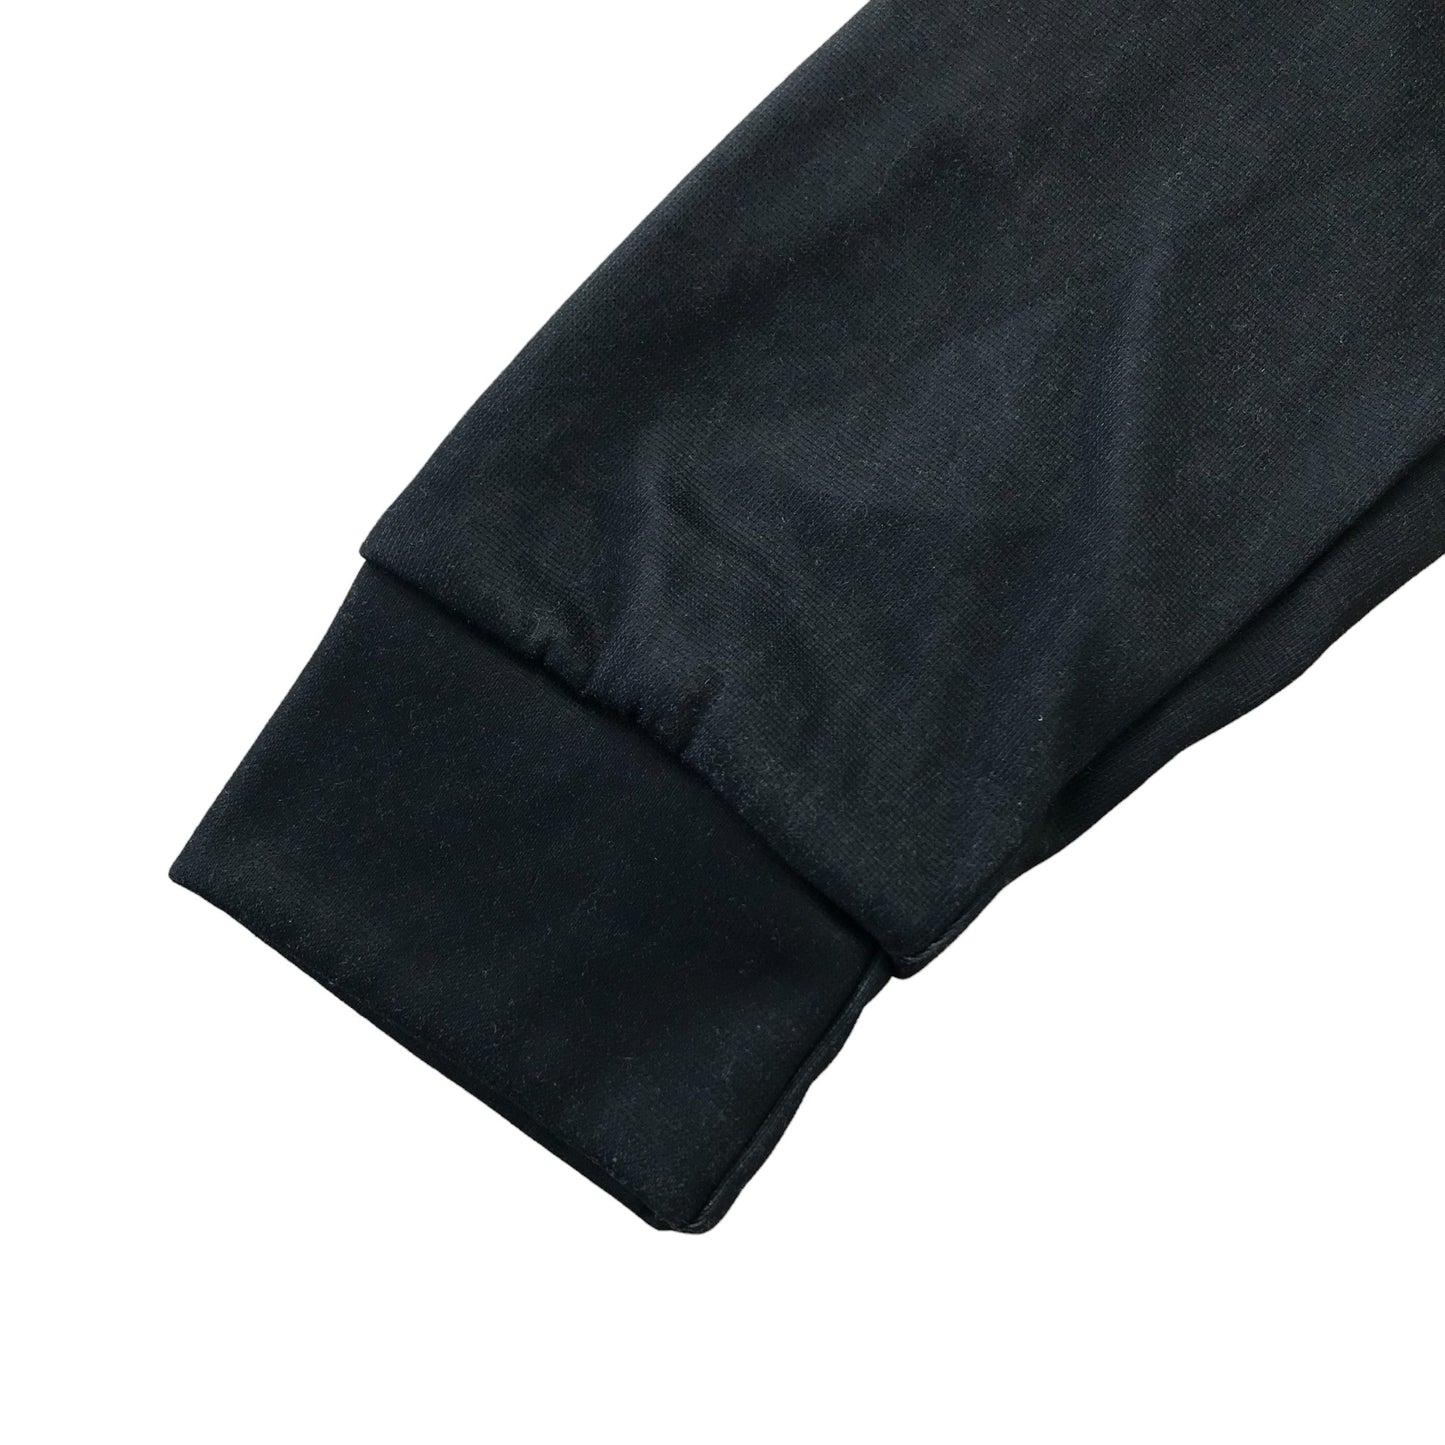 Naruto Akatsuki hoodie M adult Black long sleeve cloud design